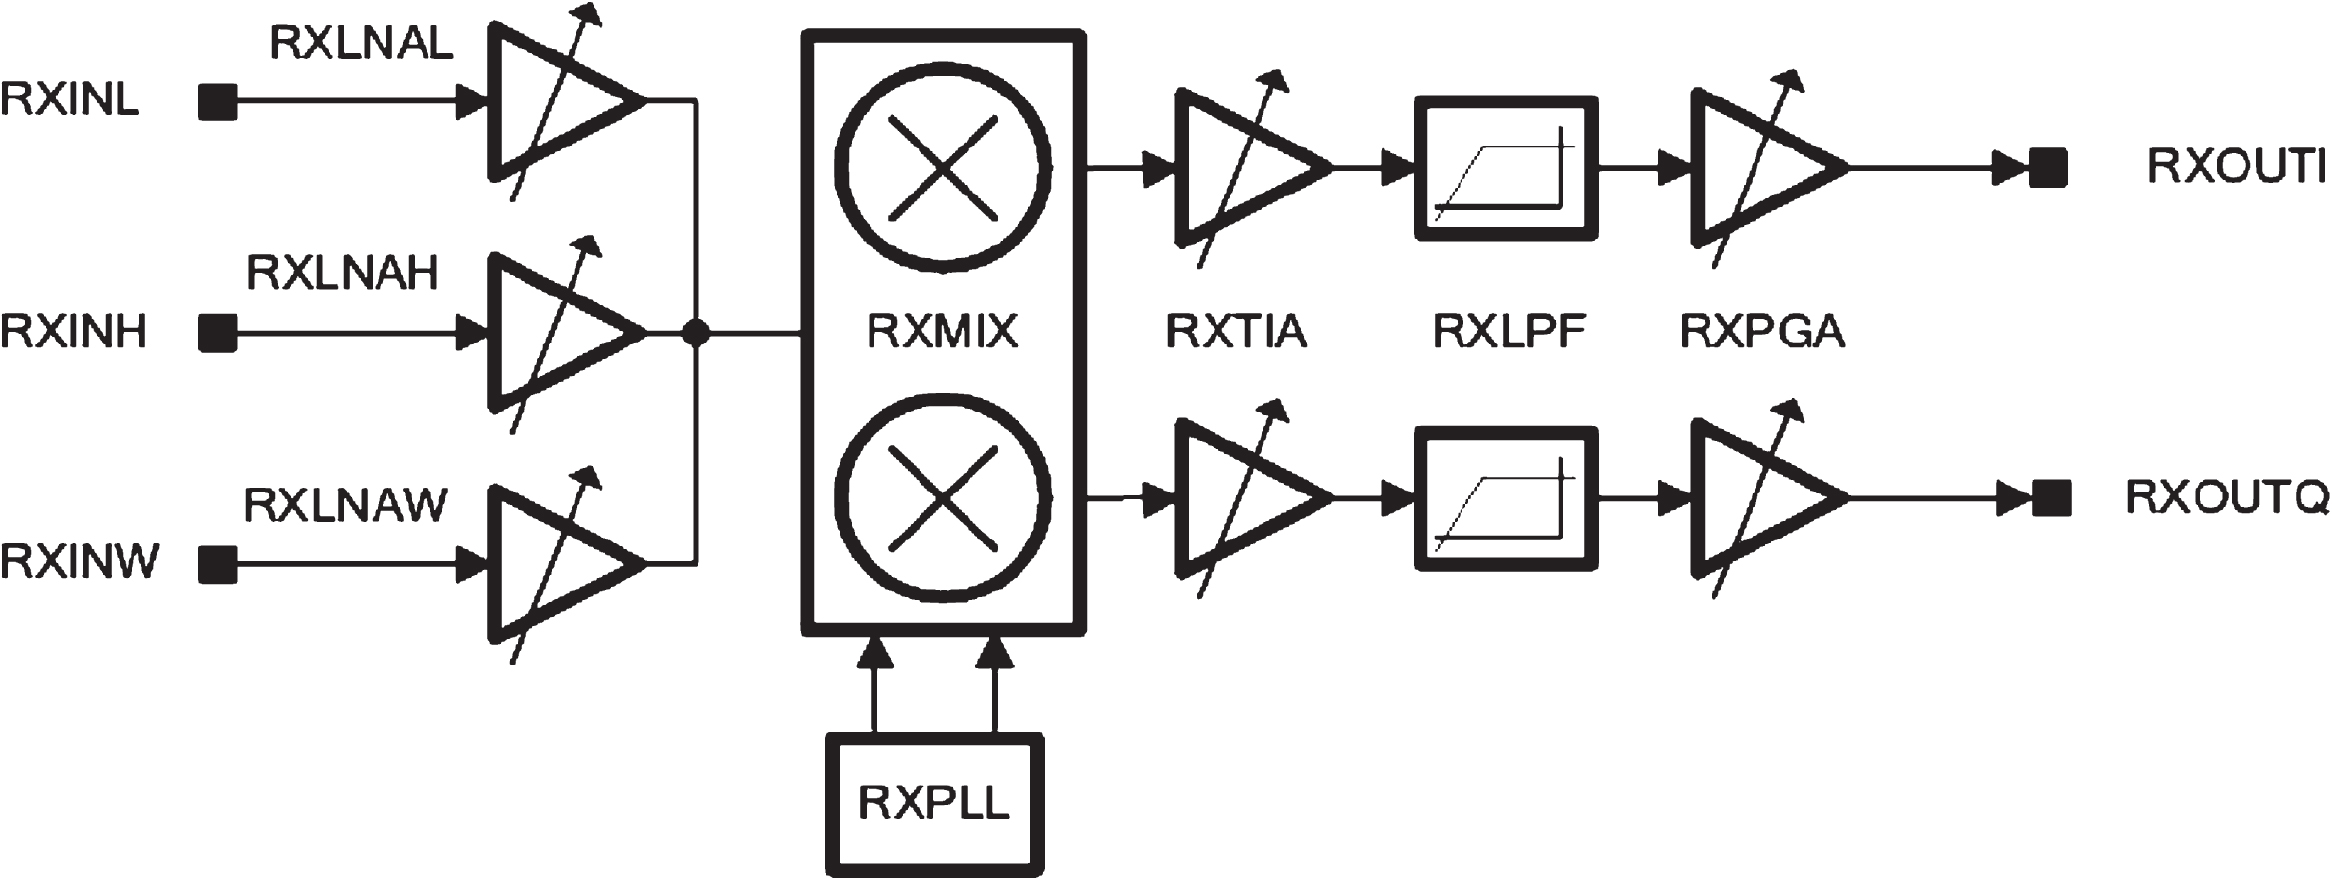 LimeSDR analog frontend processing (Myriad RF, 2019).